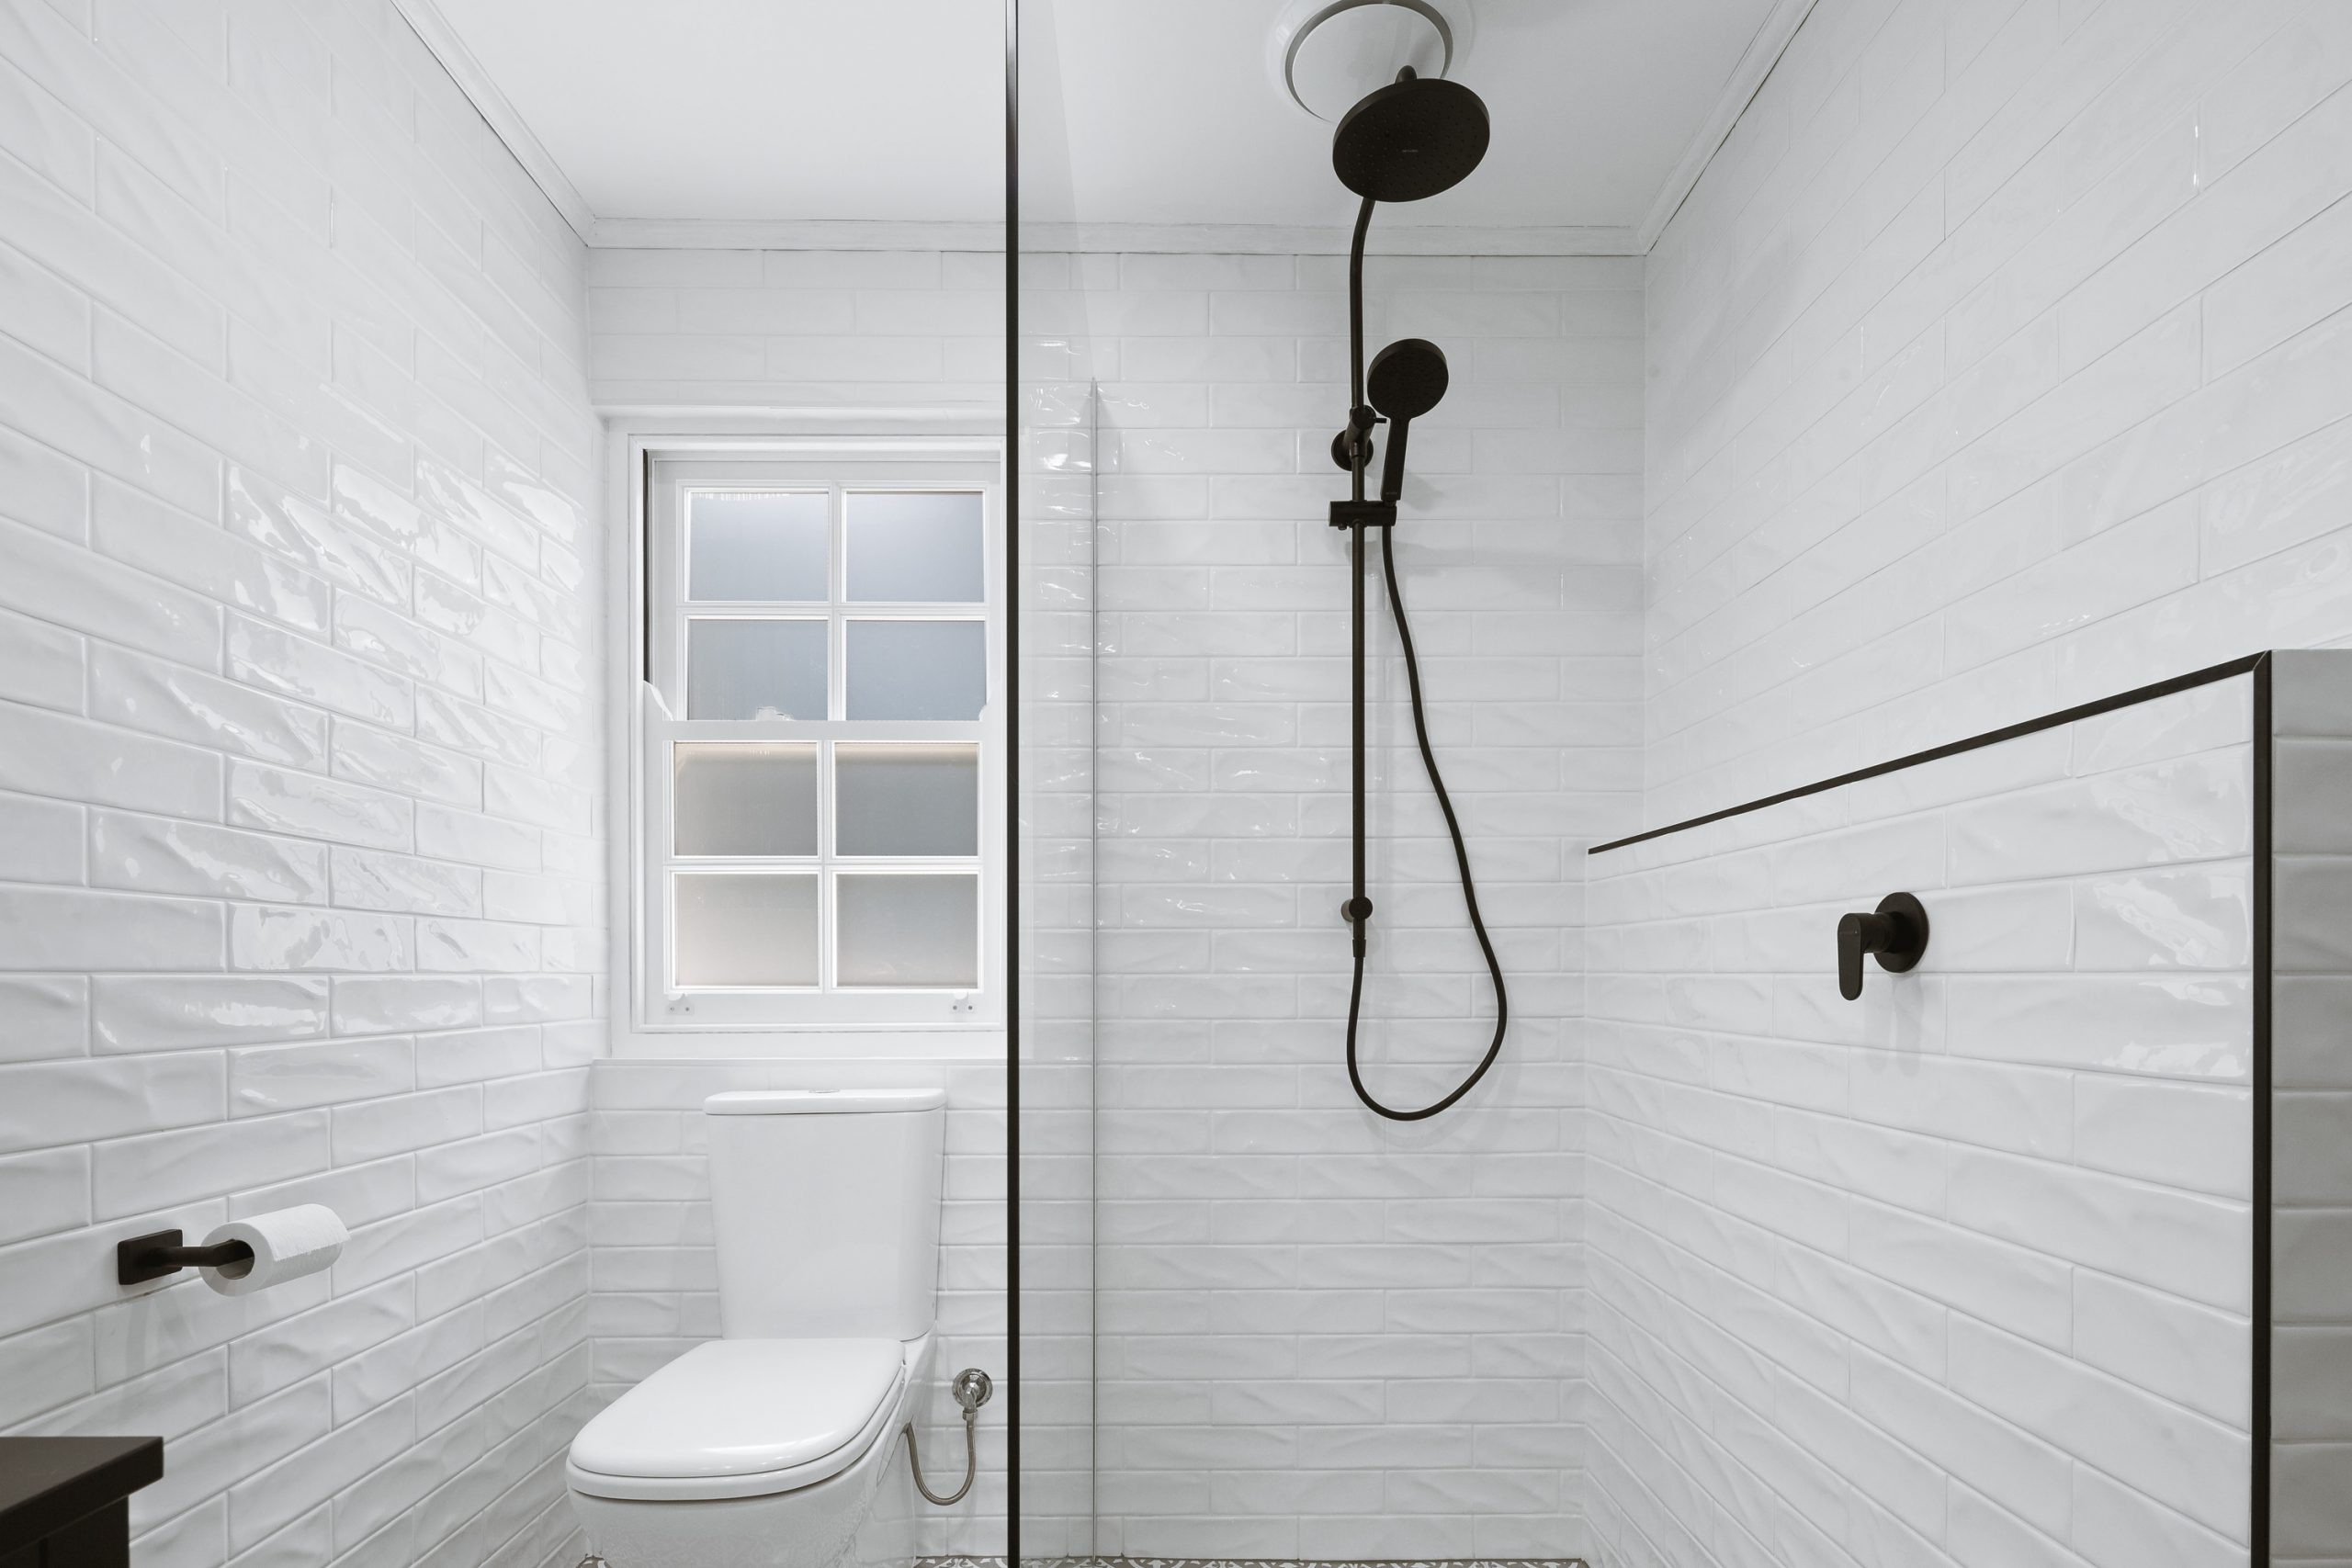 Bathroom Styling Guide: Bathroom Renovations Ideas - C&K Concepts